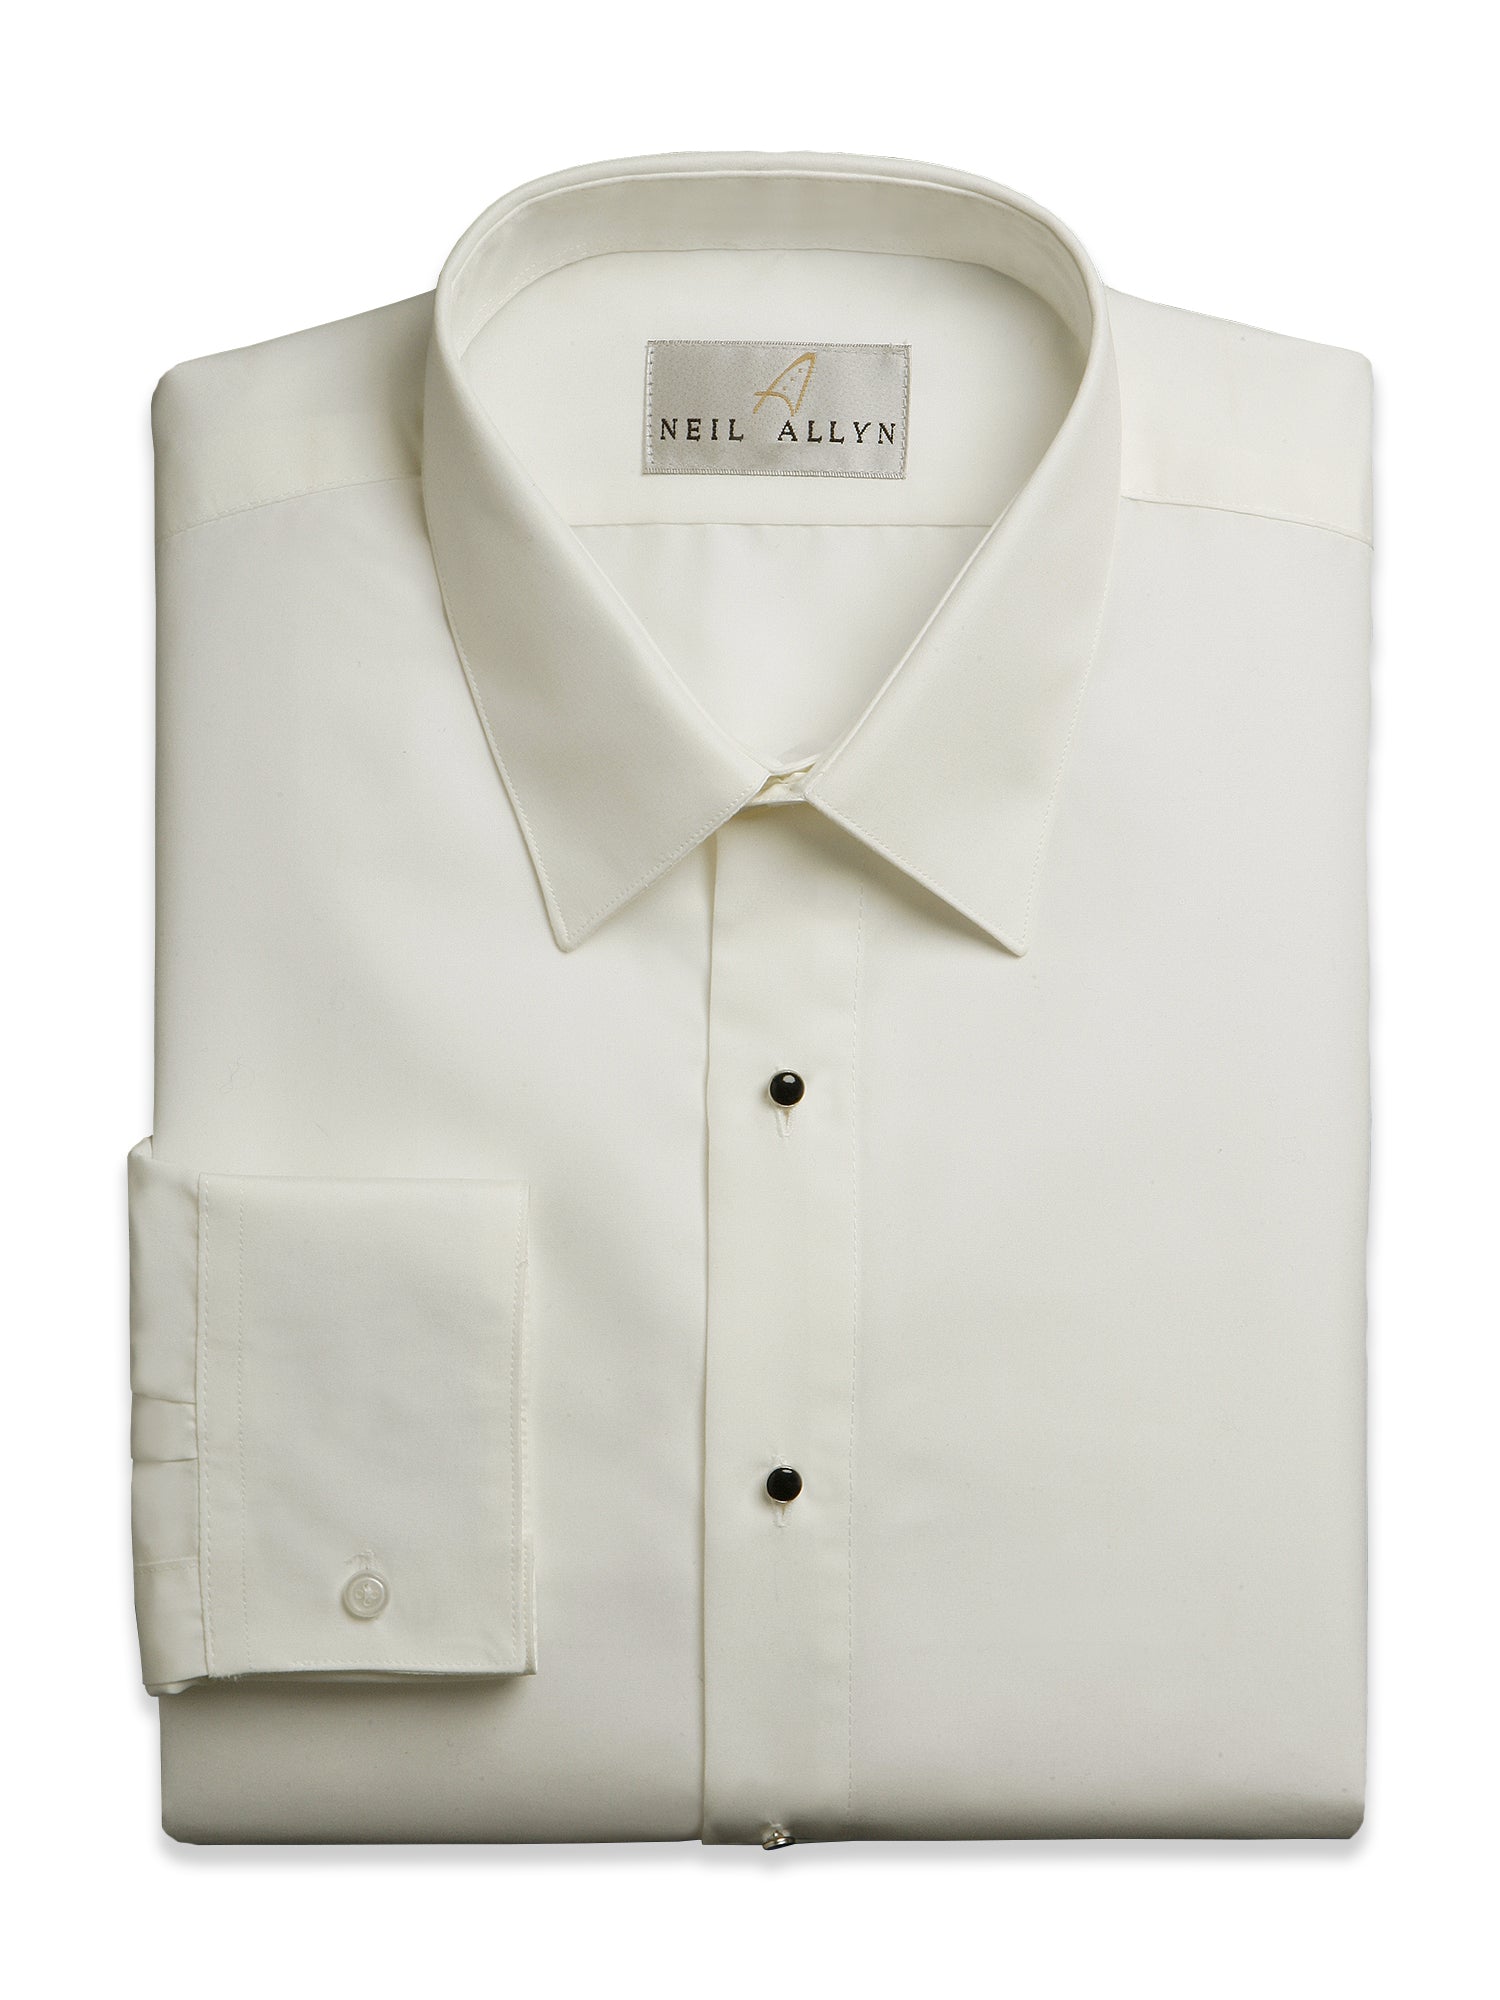 Neil Allyn Laydown Collar Men's Dress Shirts in Ivory - Big Man Sizes